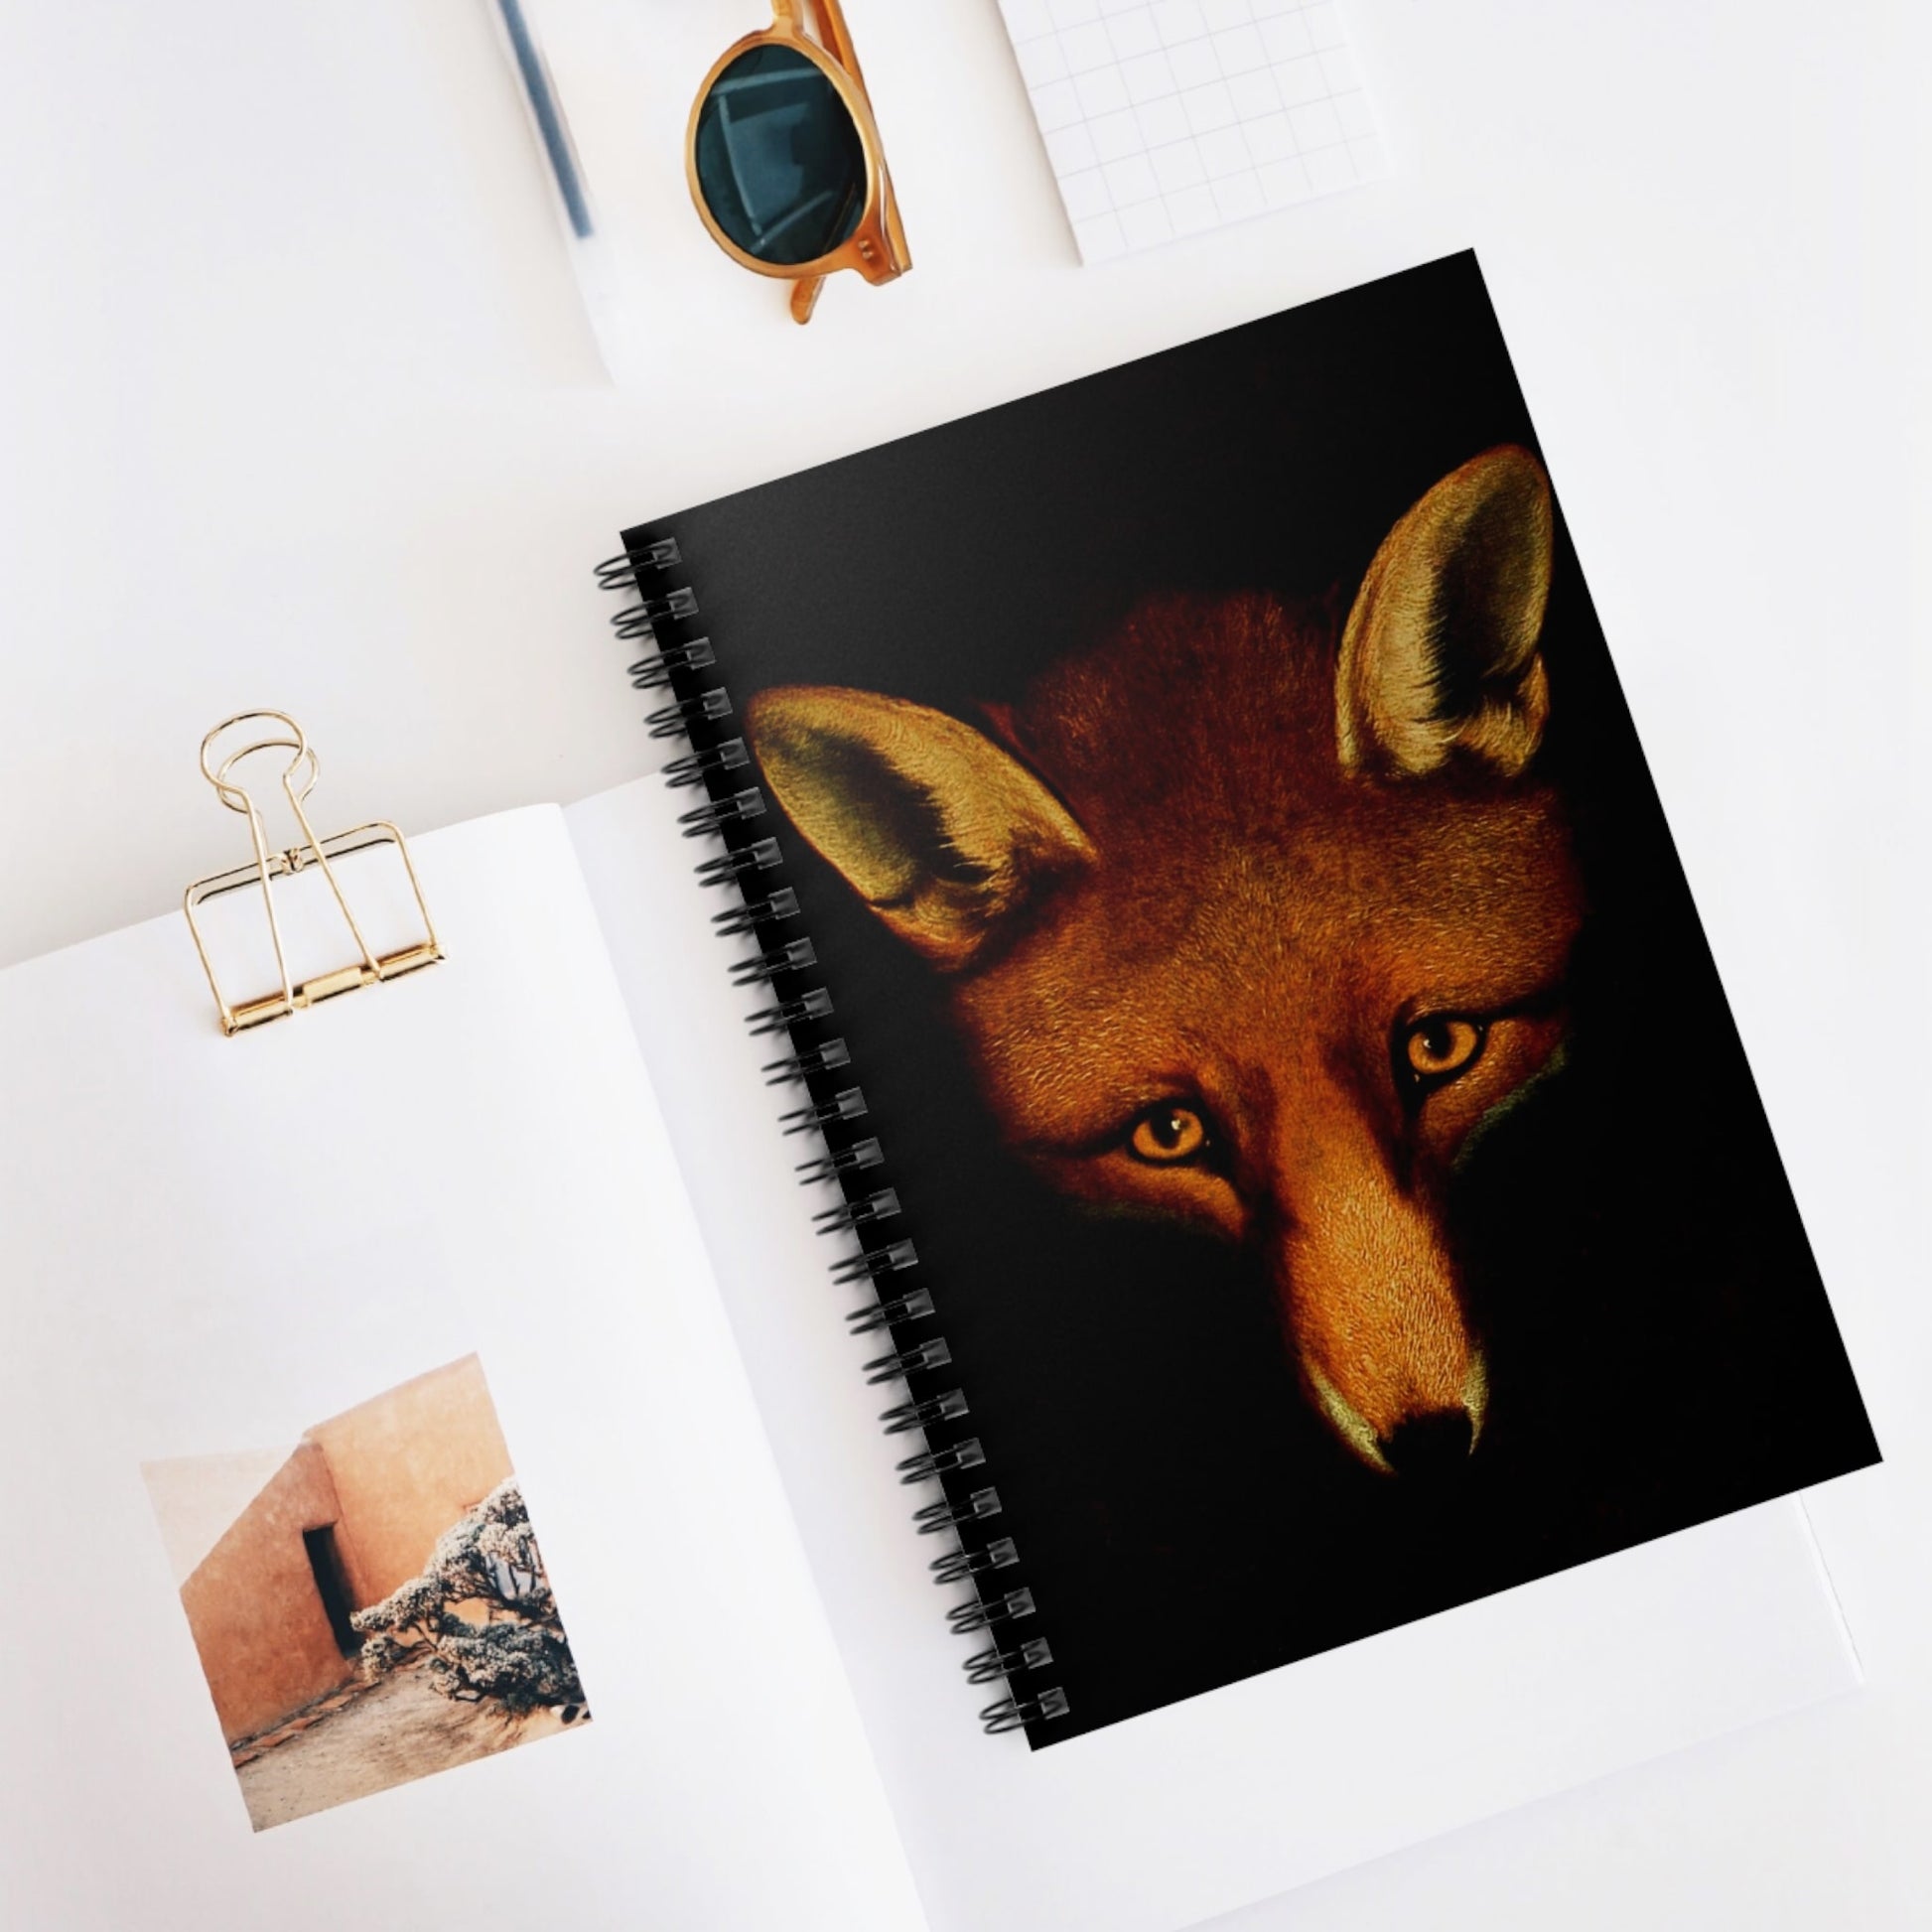 Animal Portrait Spiral Notebook Displayed on Desk